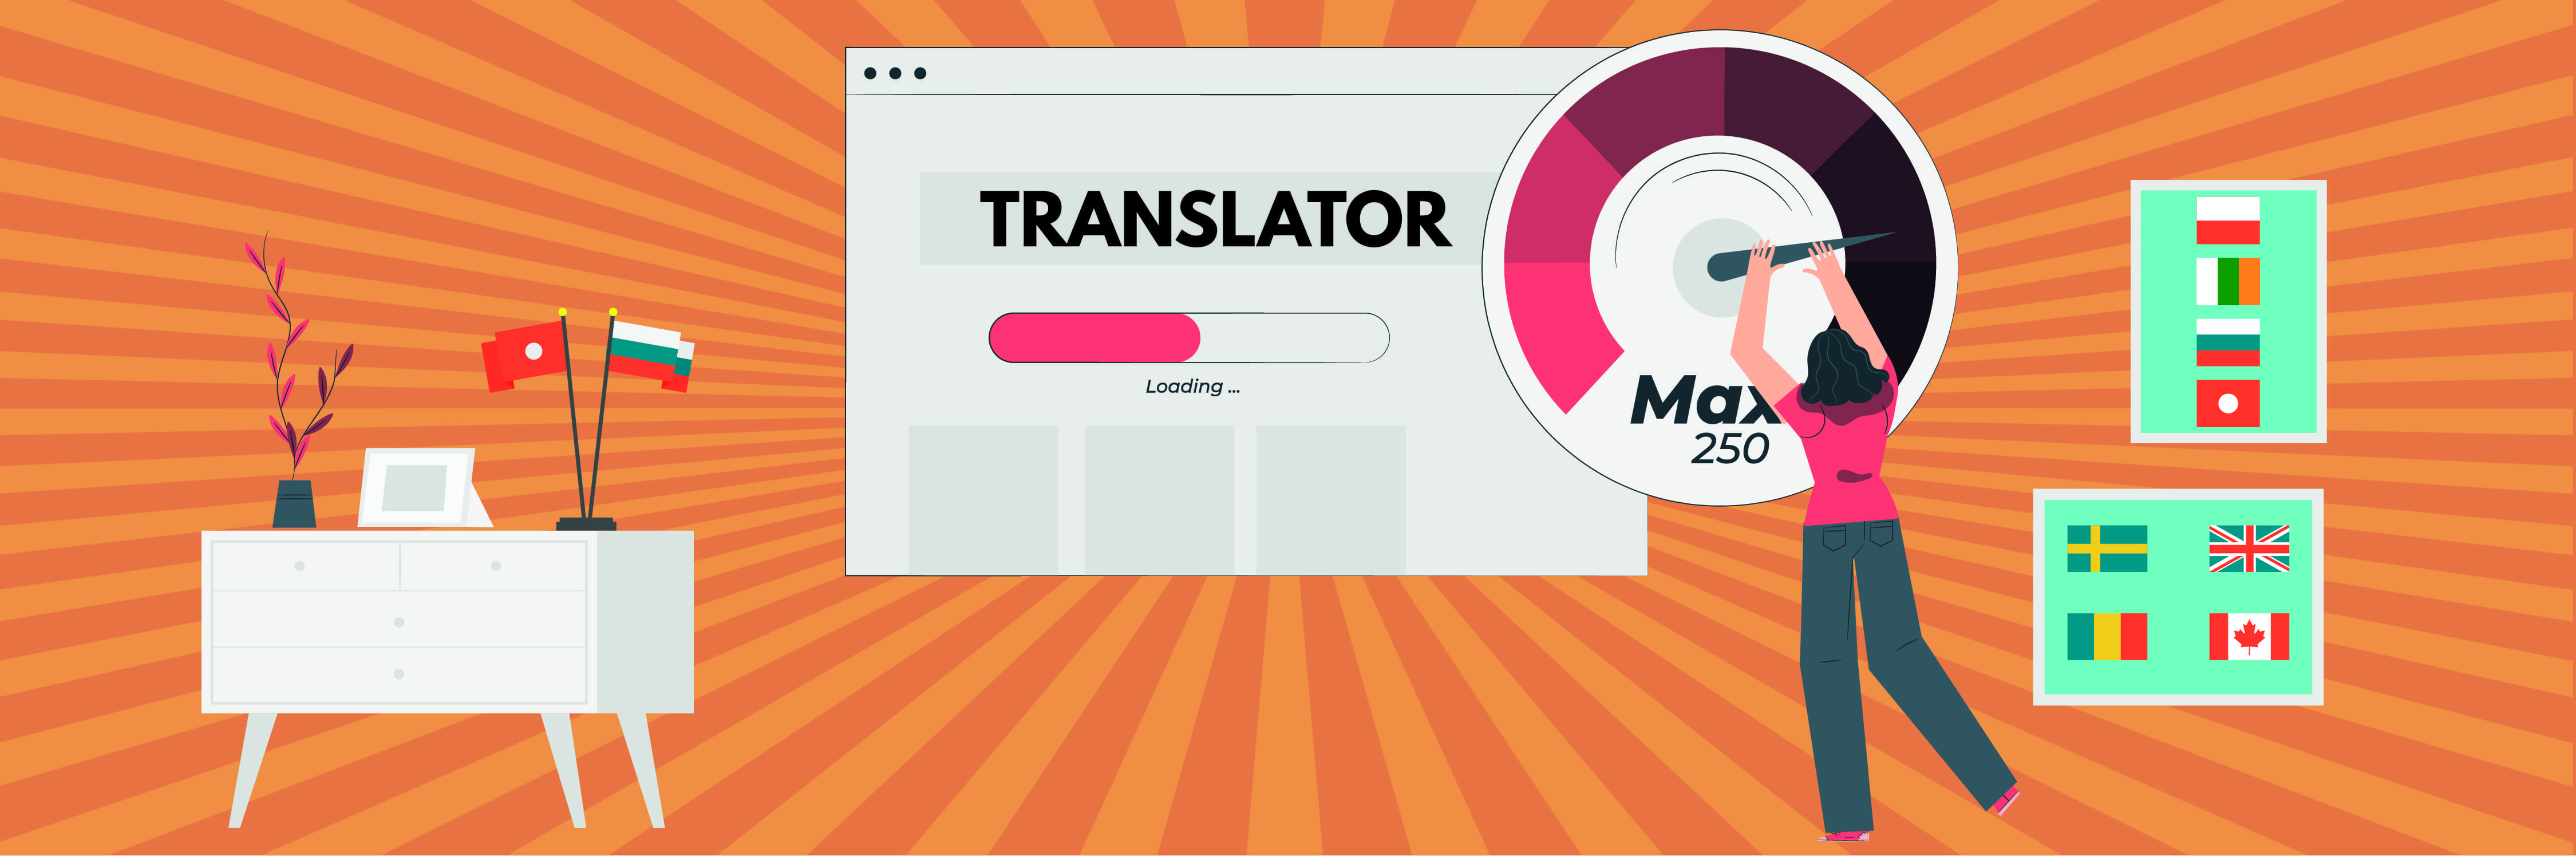 fast-translator-translating-quickly